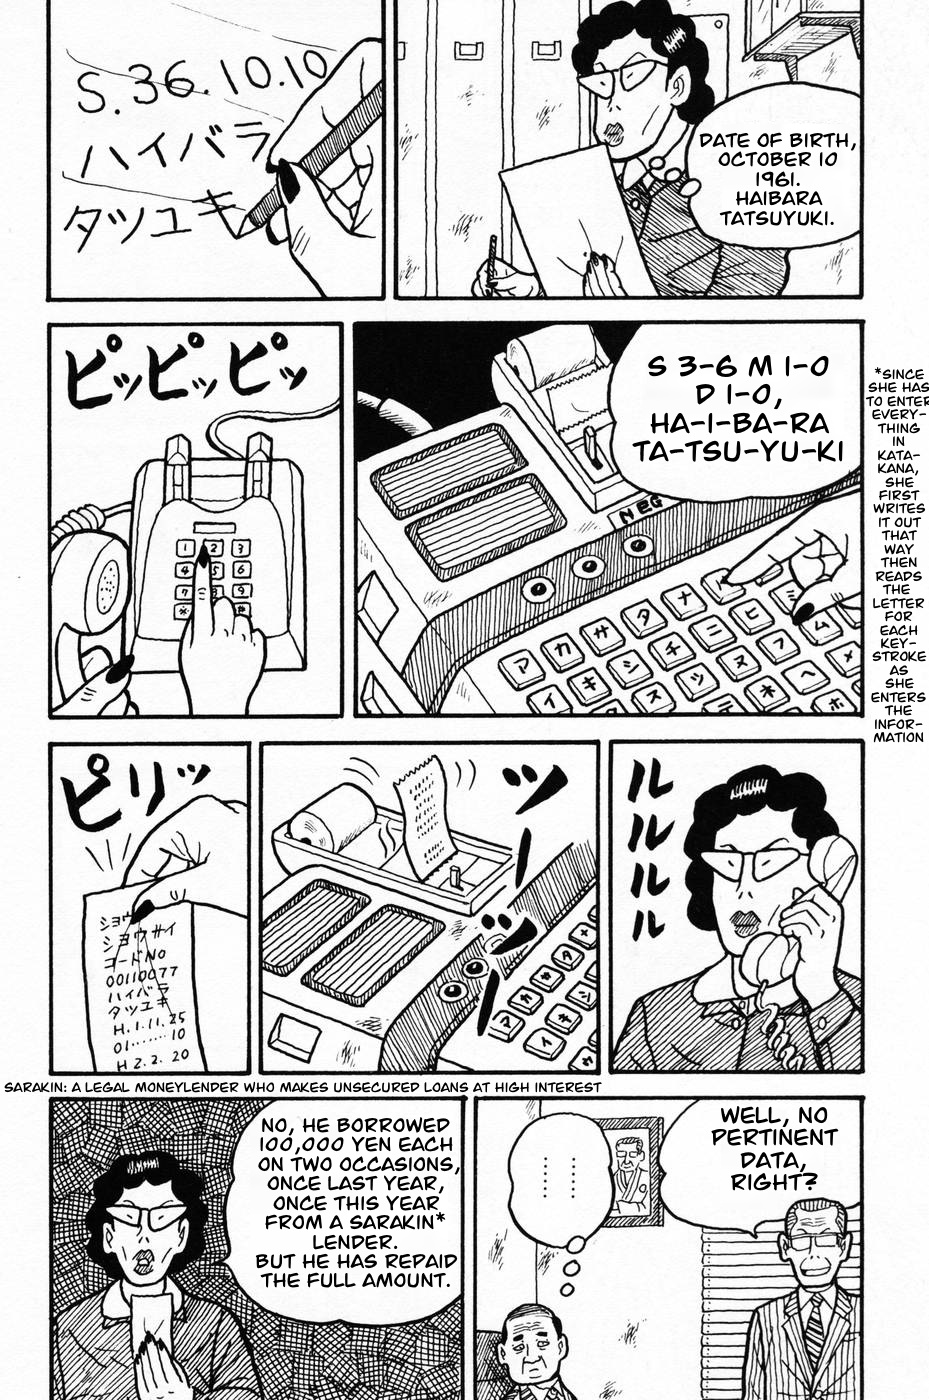 The Way Of The Osaka Loan Shark - Page 3